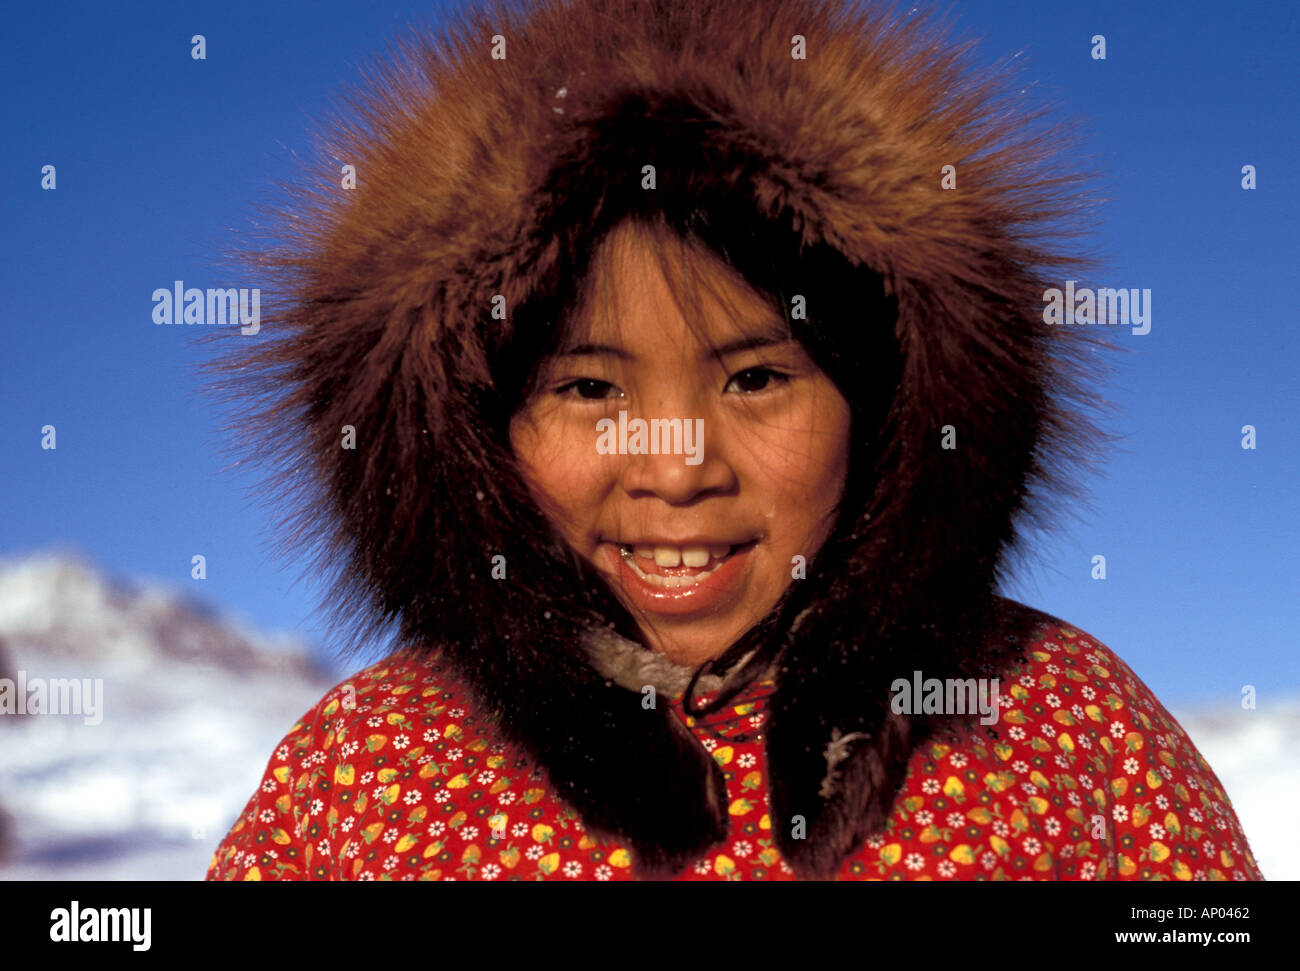 United States Alaska Eskimo girl Stock Photo - Alamy